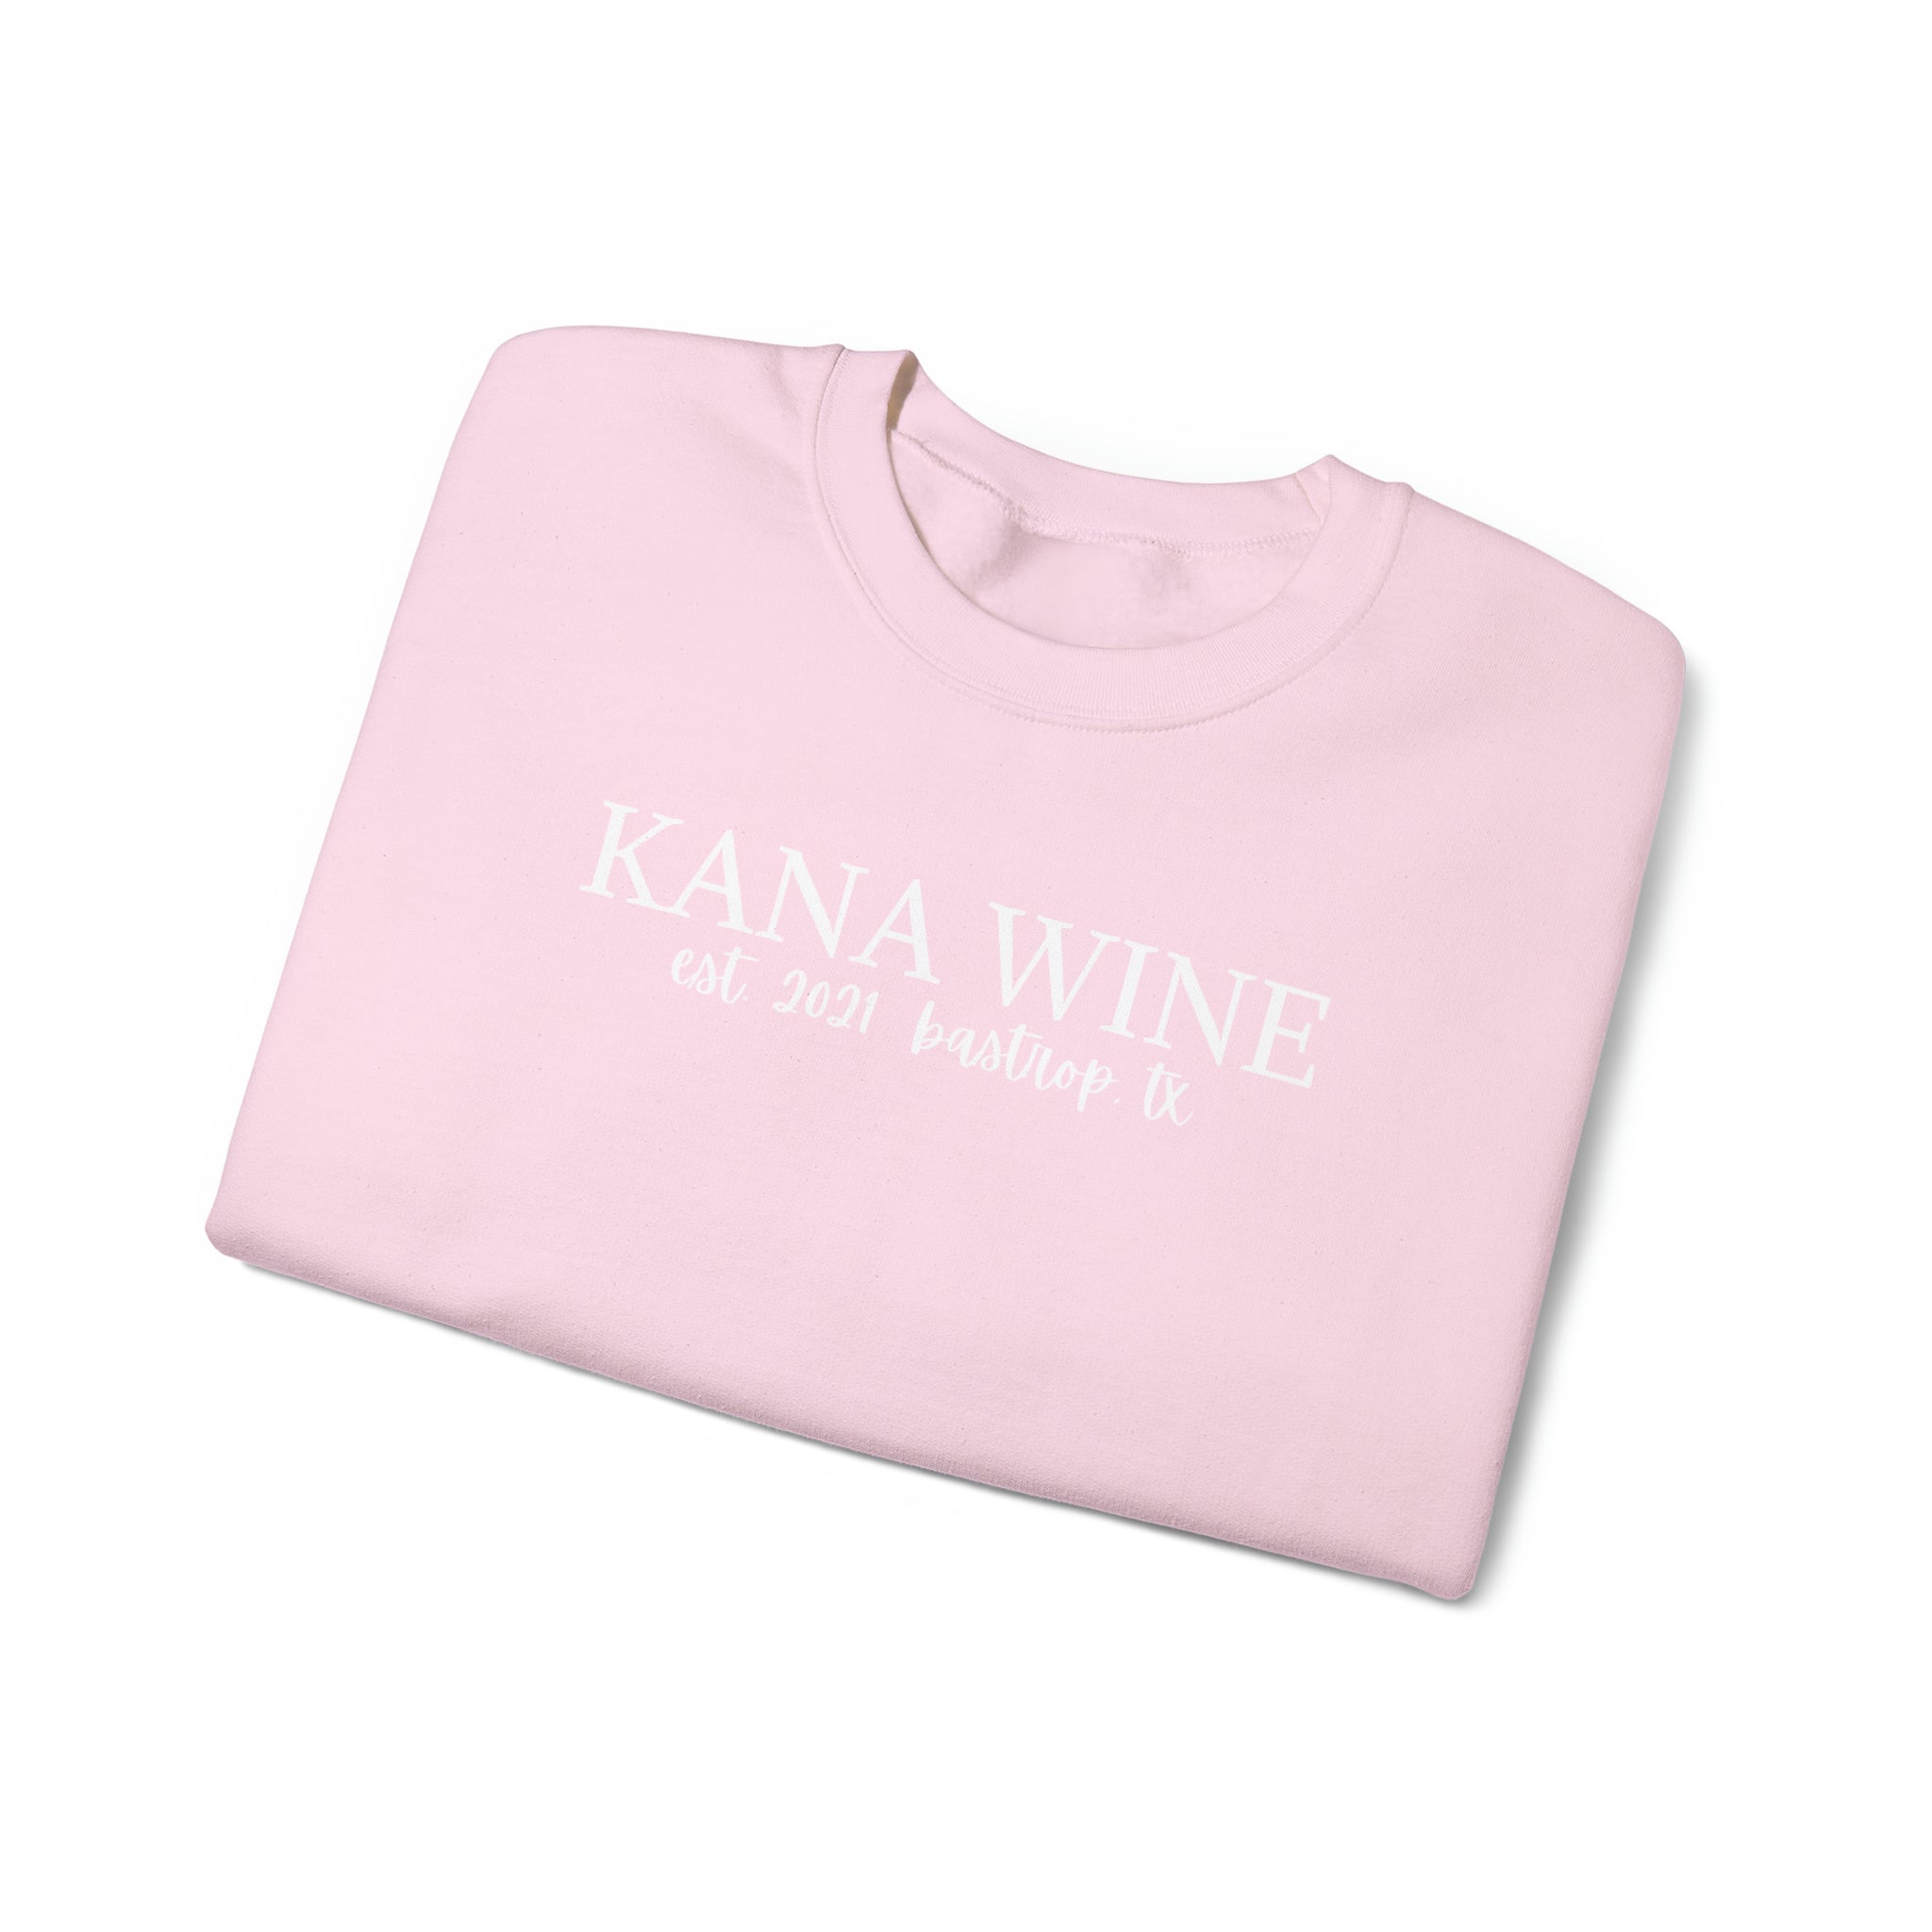 Unisex Kana Wine Crewneck Sweatshirt